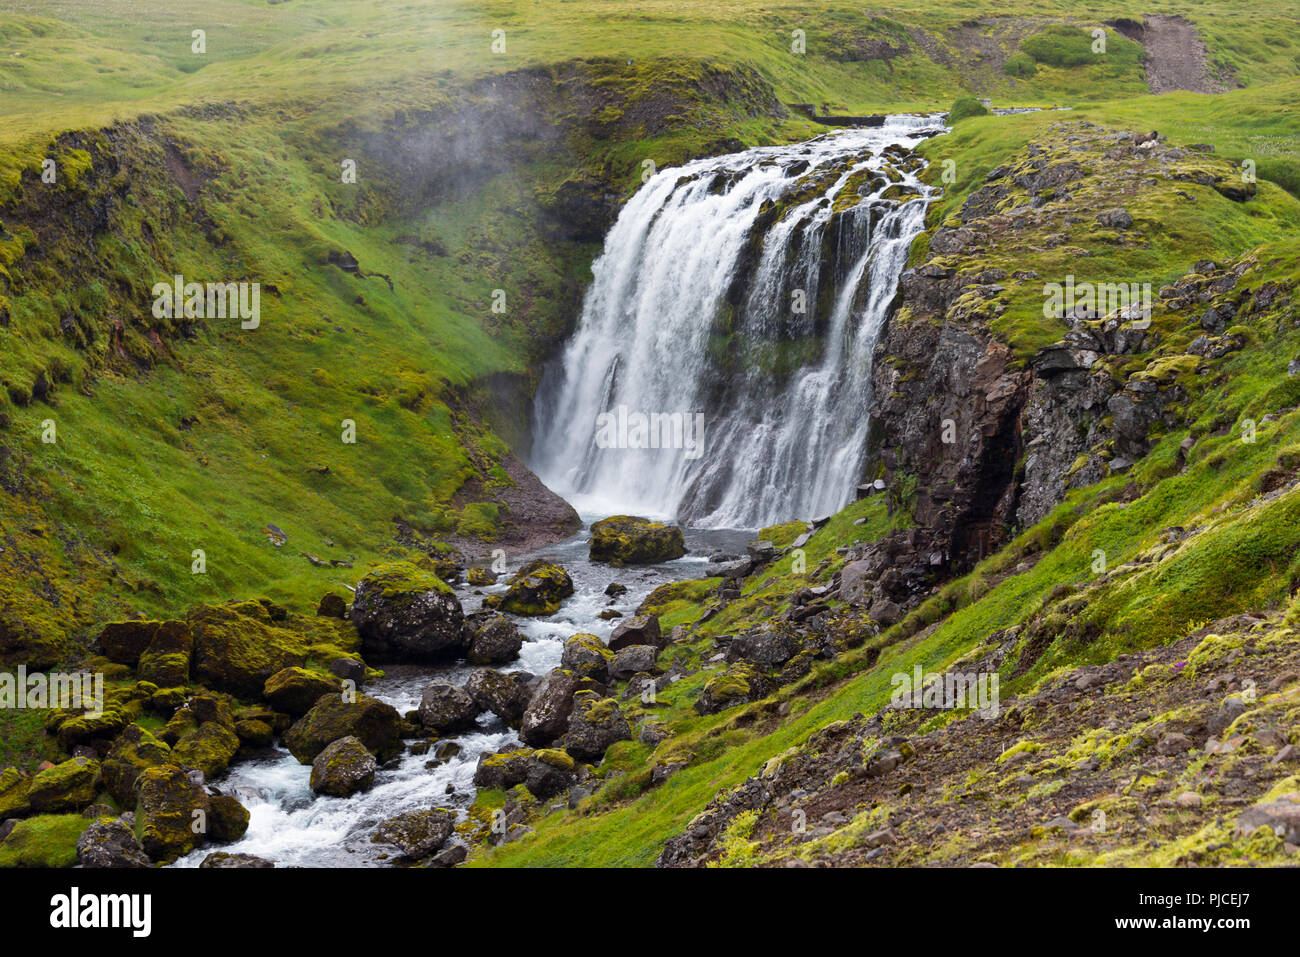 Wasserfall, F570, Halbinsel Snaefellsnes, Island, Sn ae fellsnes, Wasserfall, Halbinsel Snaefellsnes, Insel, Snaefellsnes Stockfoto